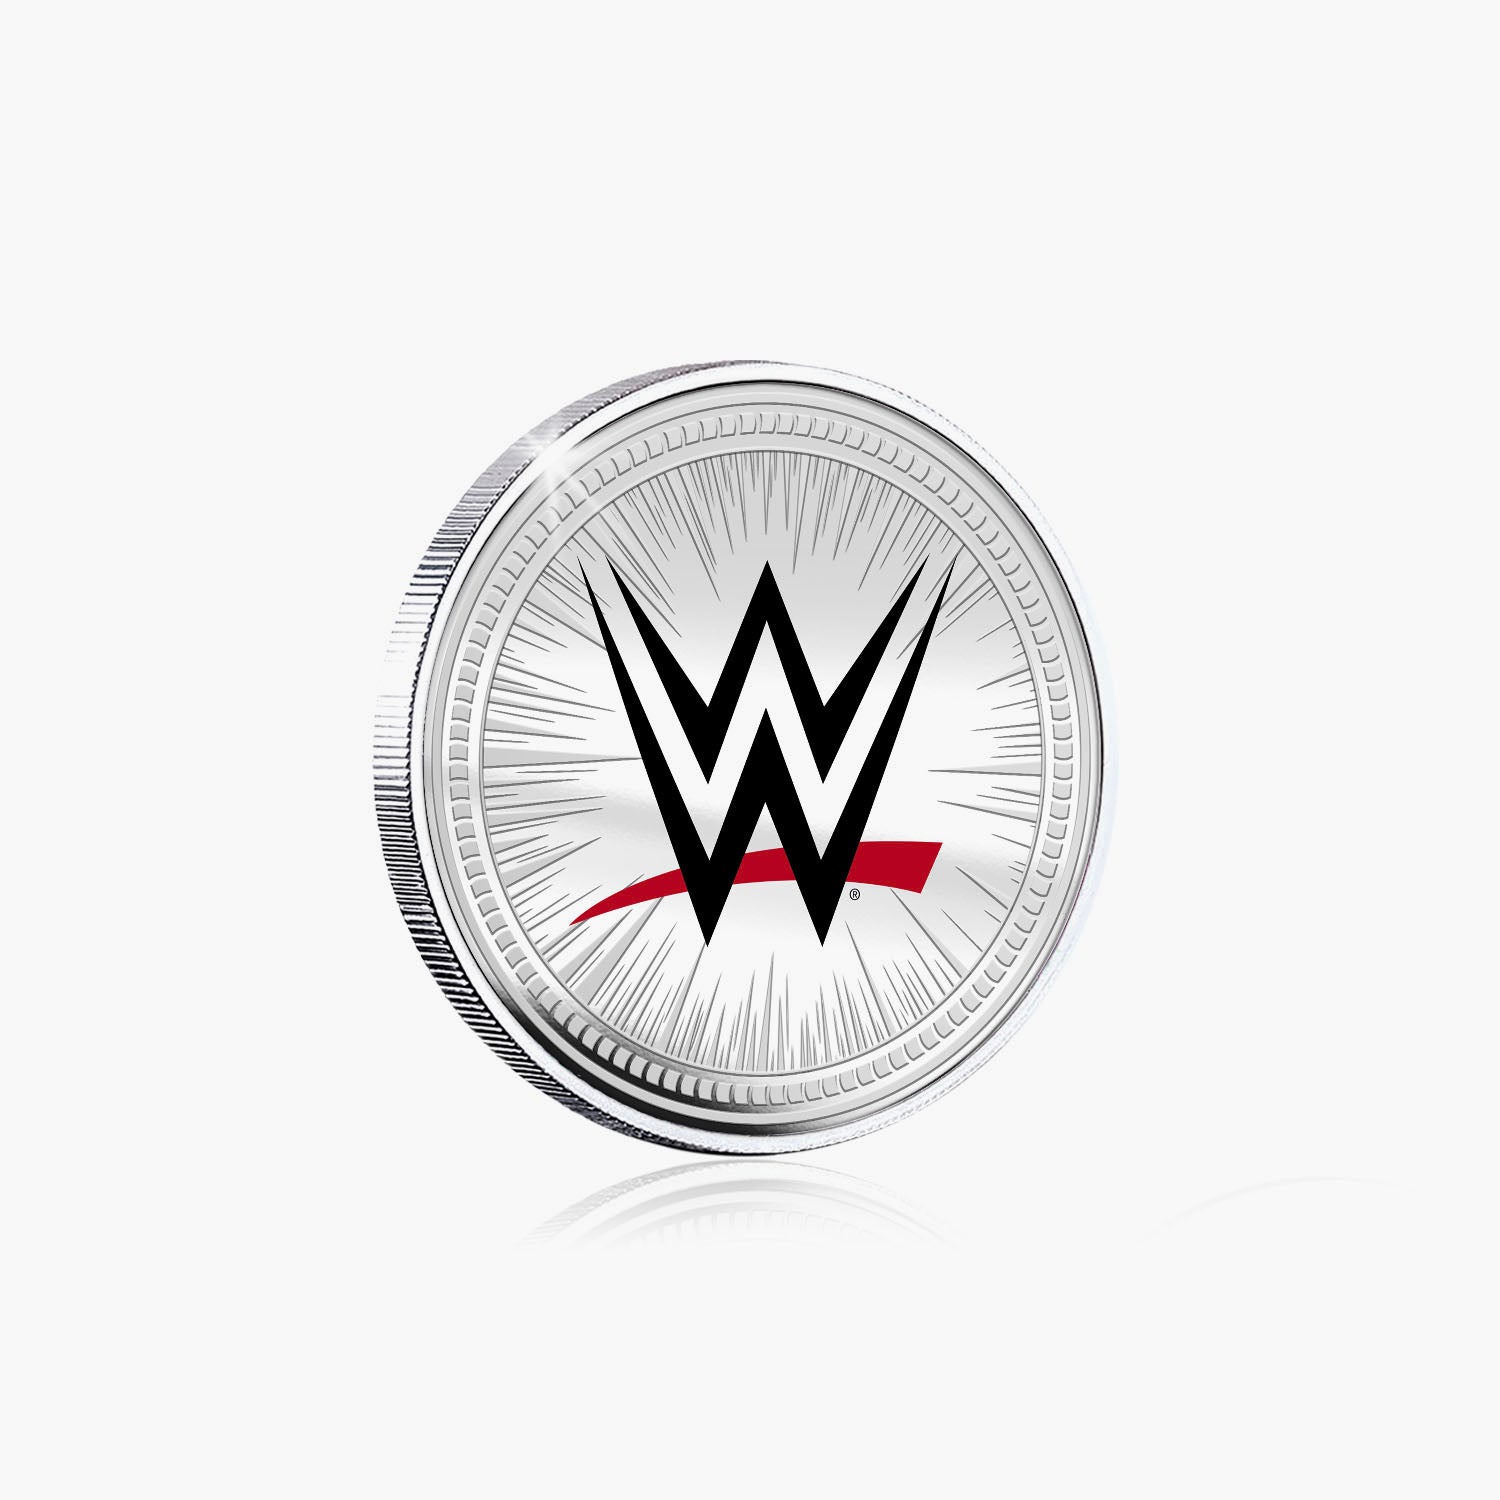 WWE Commemorative Collection - Shinsuke Nakamura - 32mm Silver Plated Commemorative